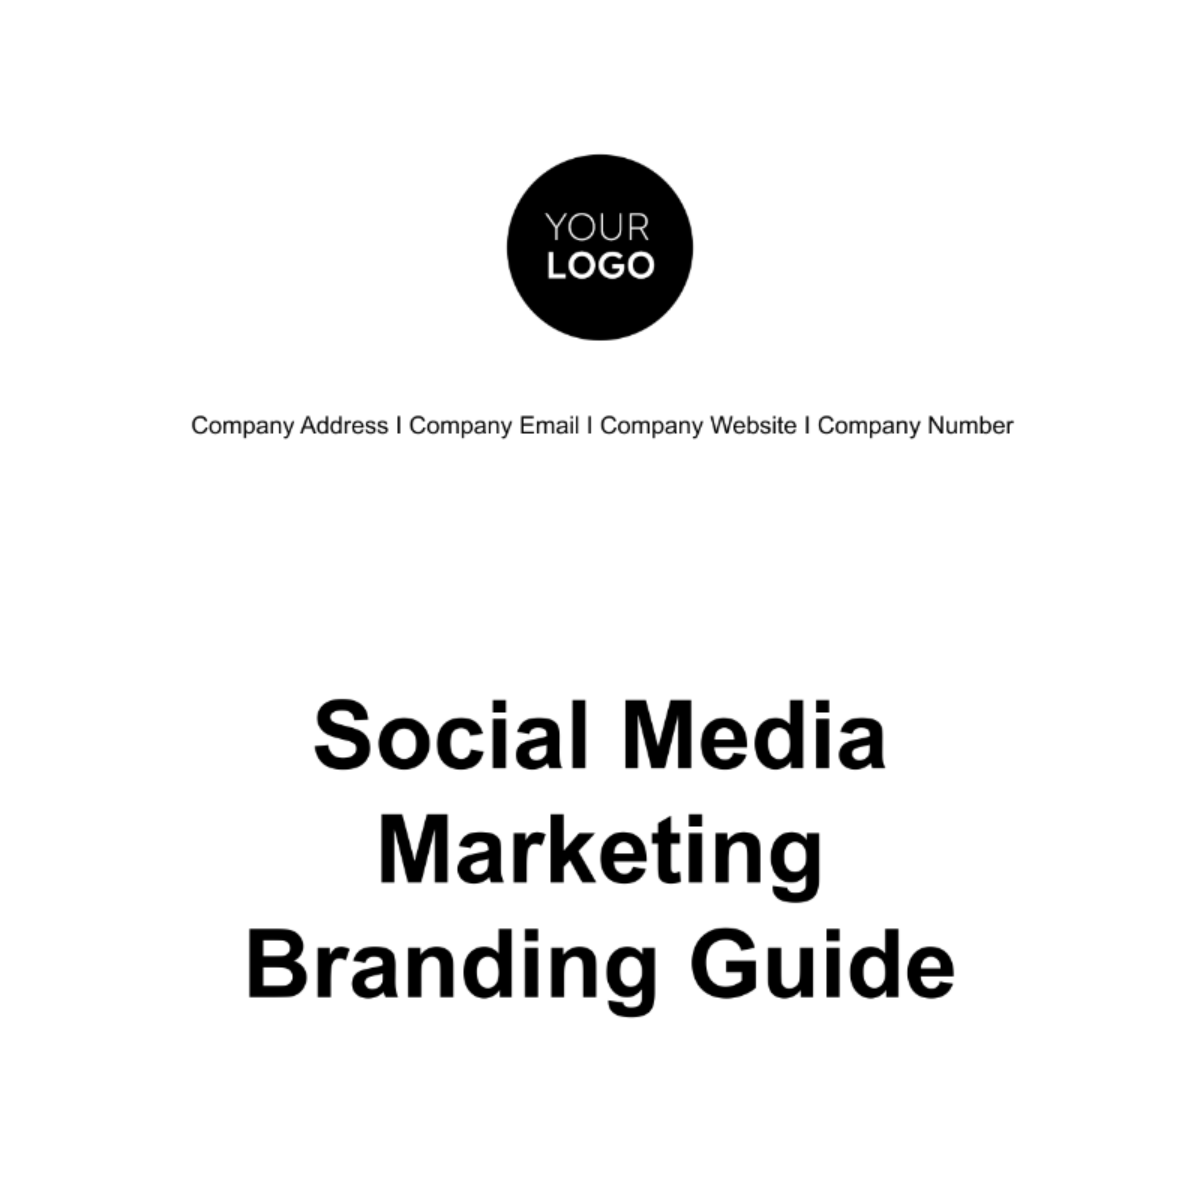 Social Media Marketing Branding Guide Template